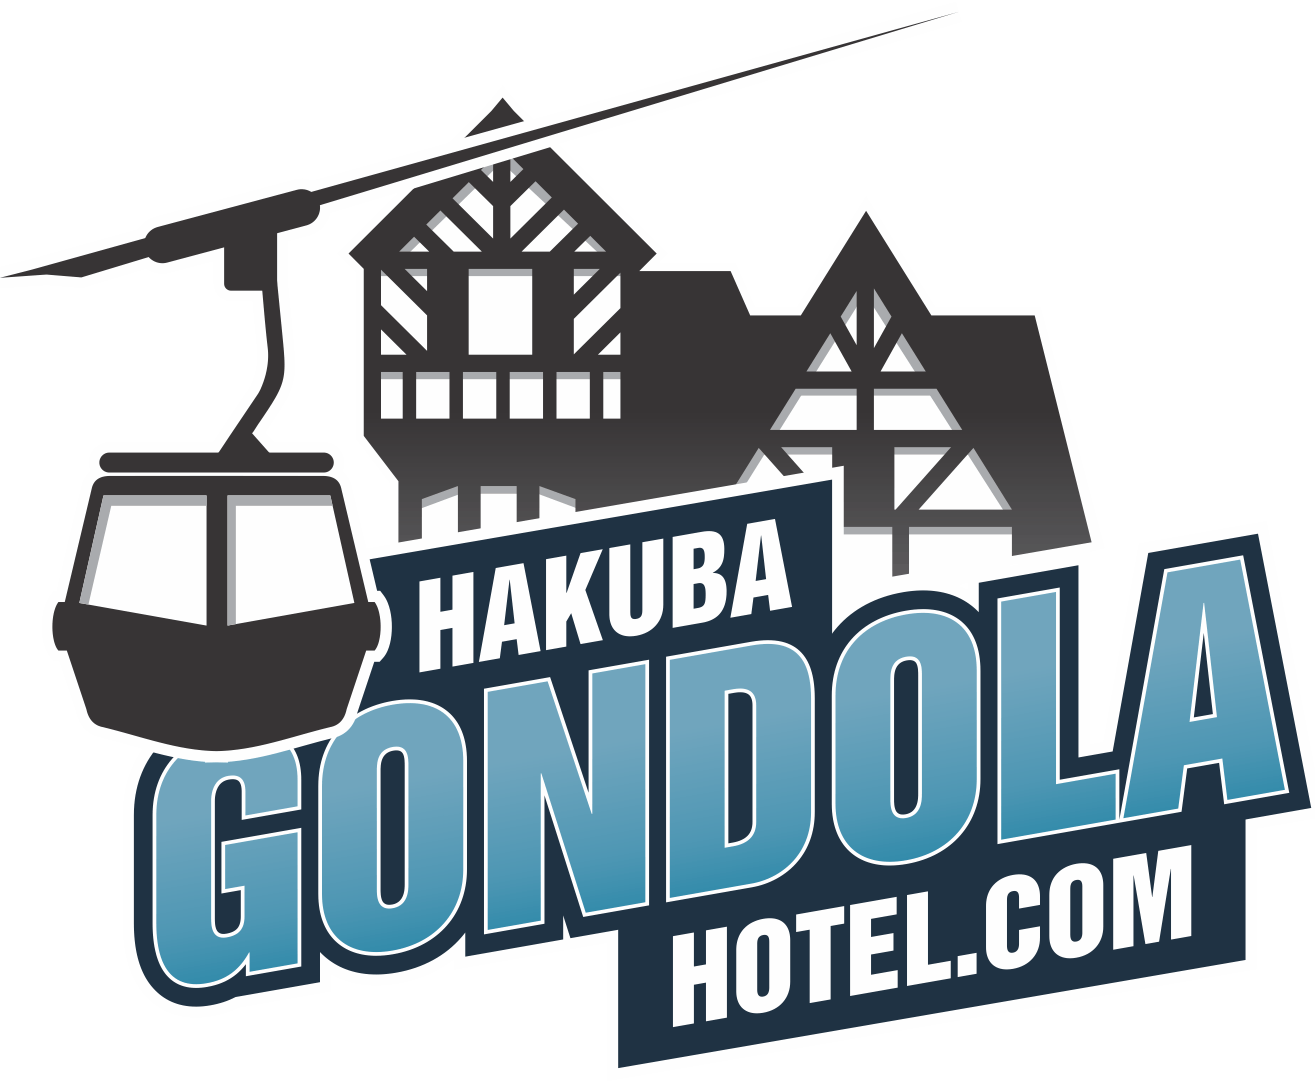 Hakuba Gondola Hotel